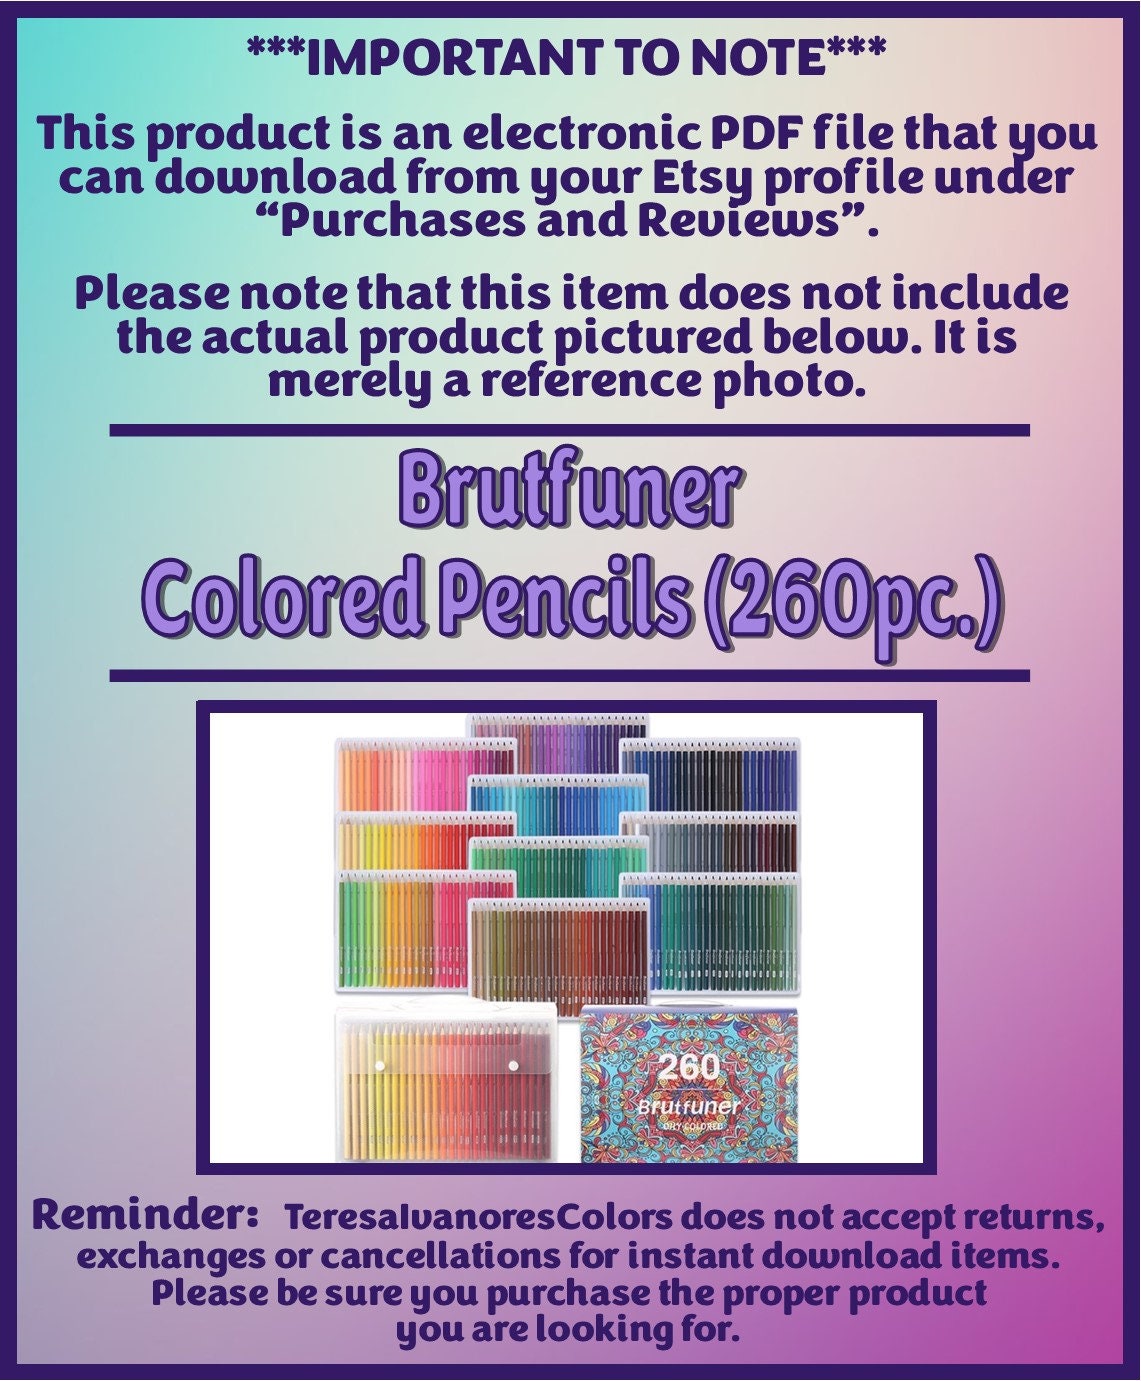 Brutfuner Pencils VS Faber Castell Colored Pencils : r/ColoredPencils